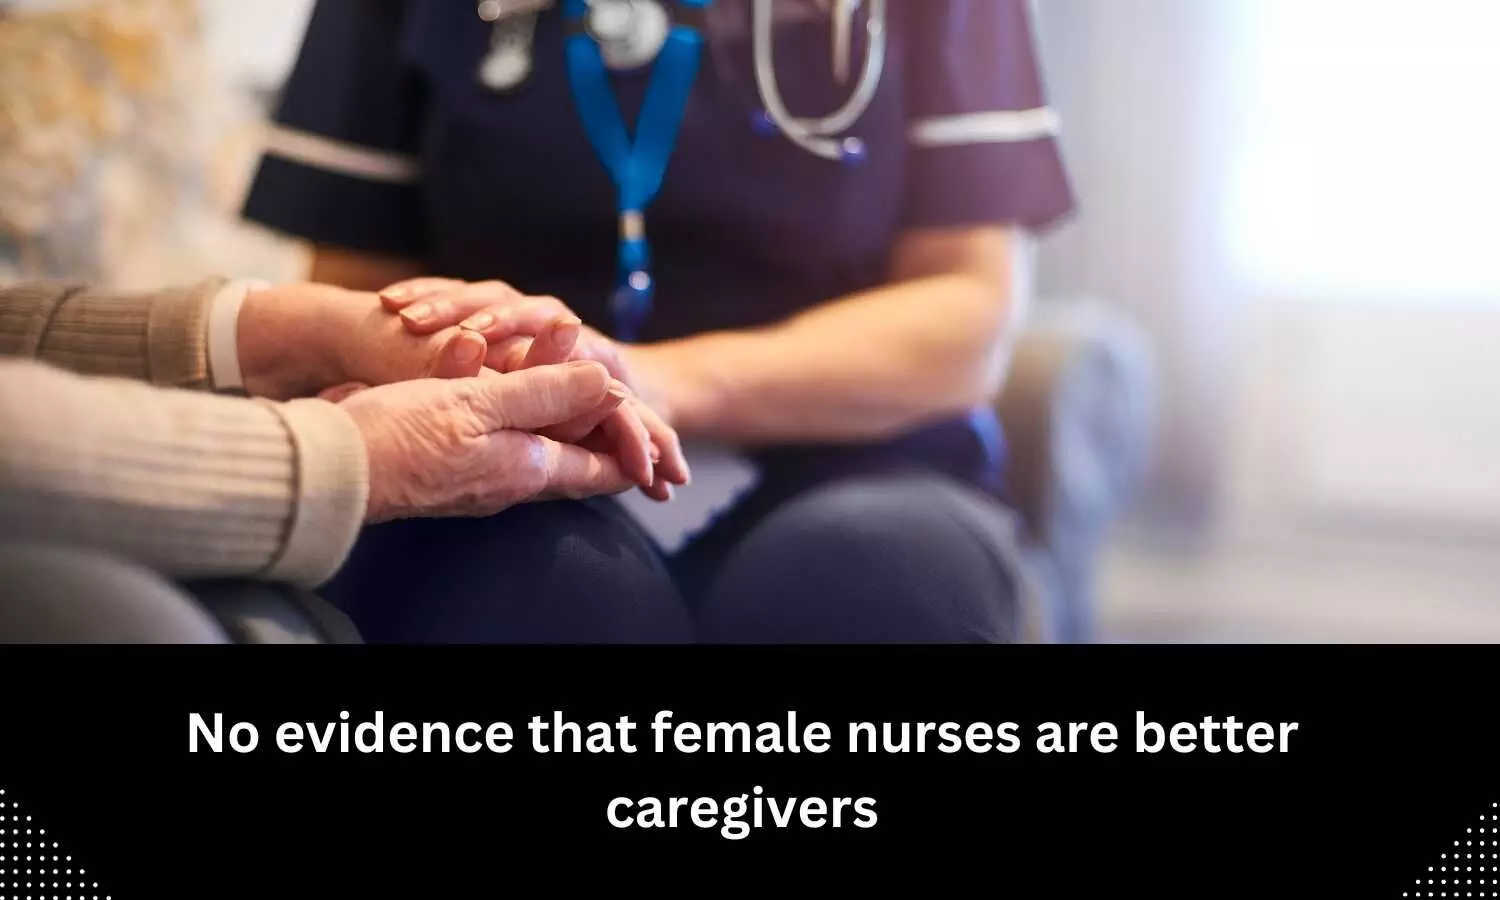 Are female nurses better?